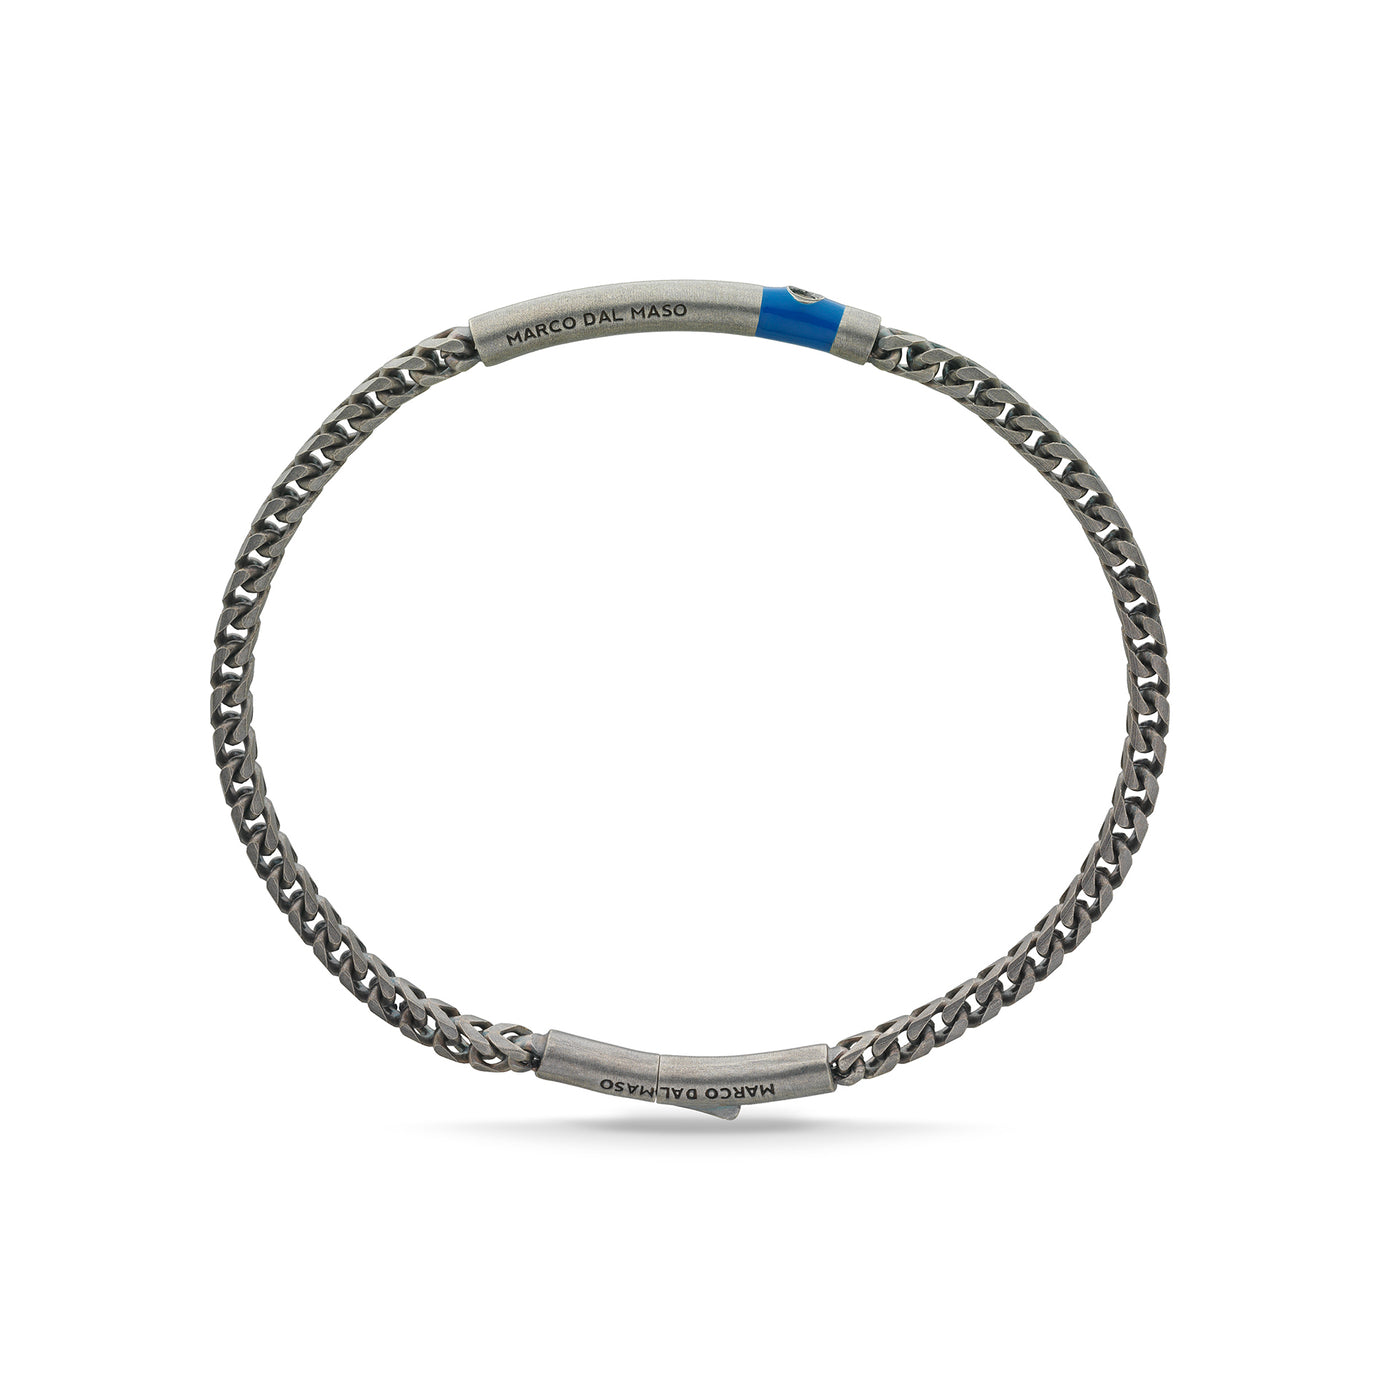 Ulysses Chain Oxidized Bracelet with black diamond and blue enamel